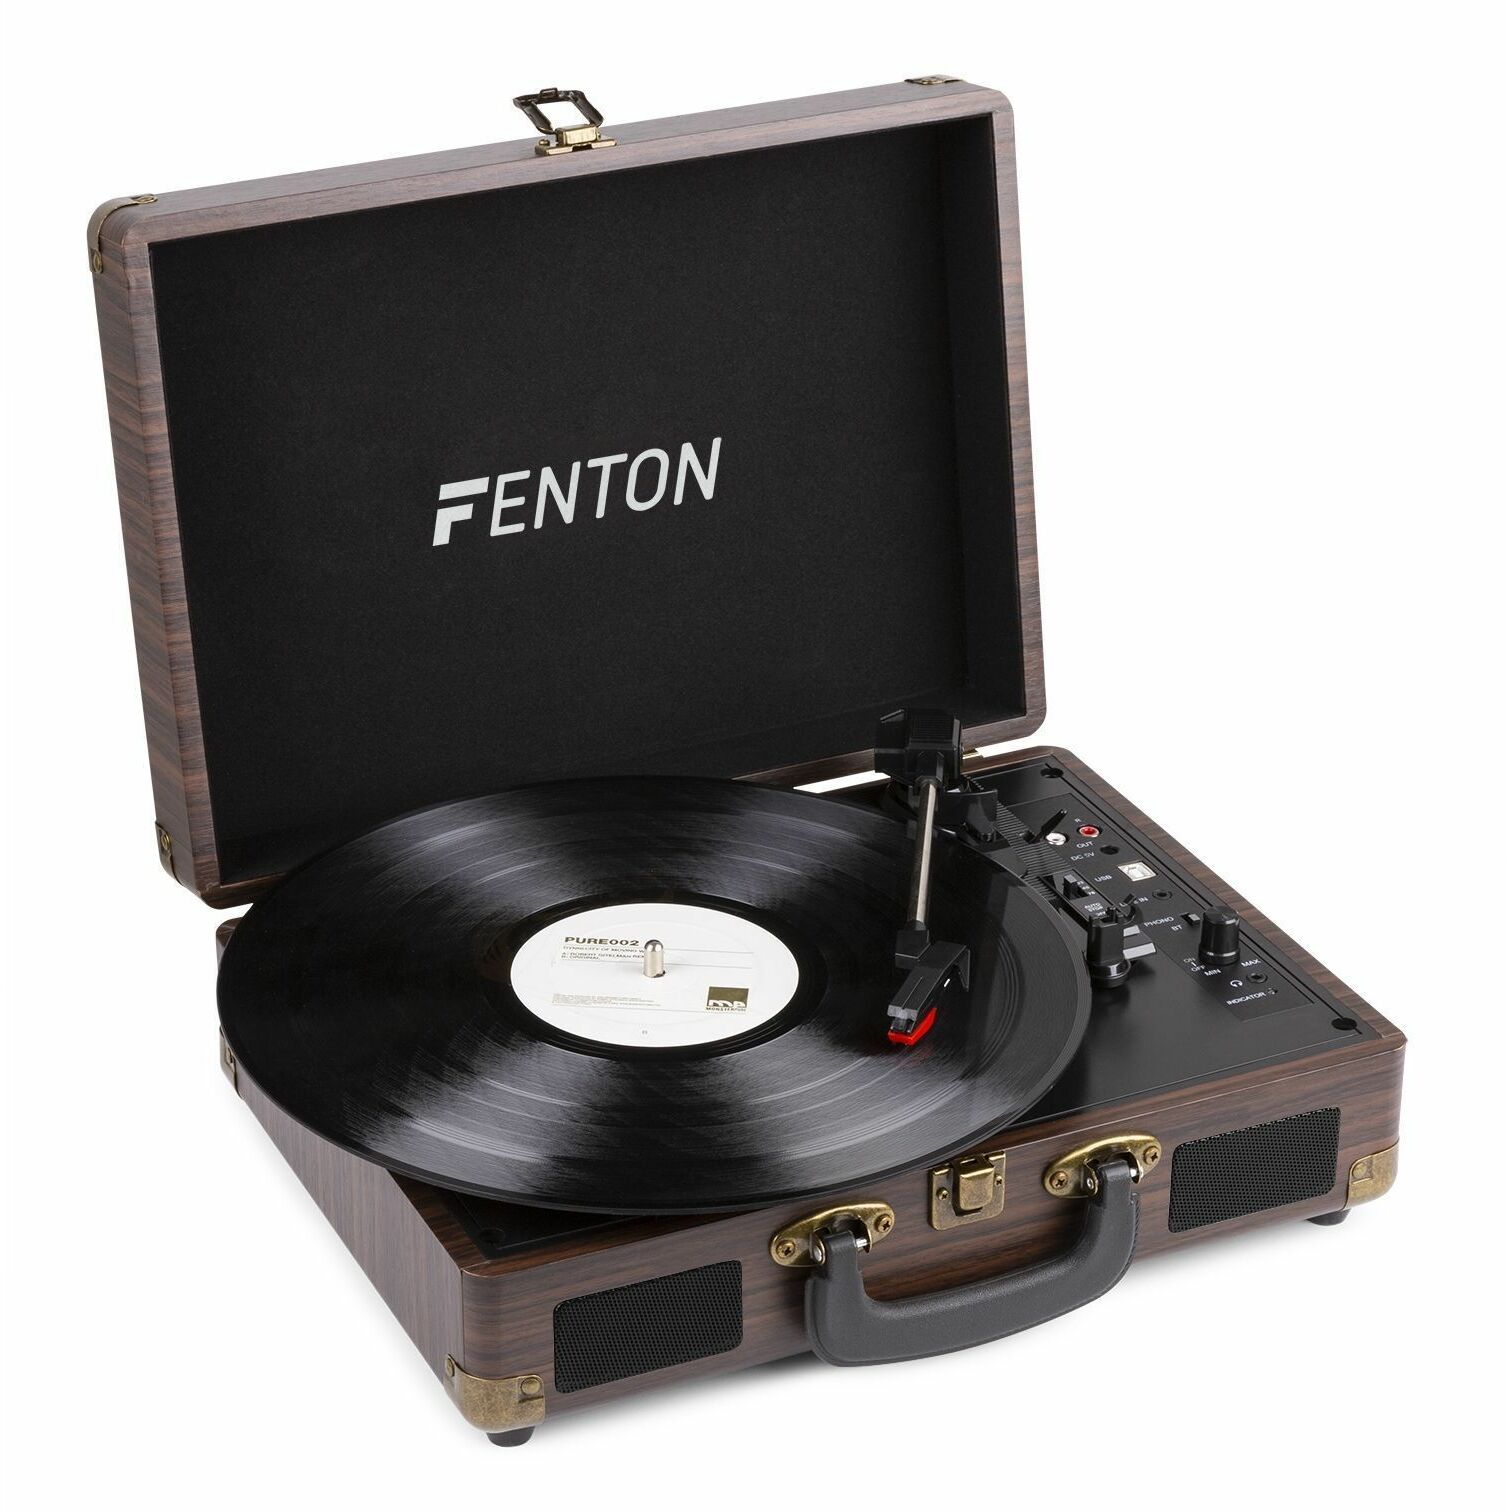 Retourdeal - Fenton RP115B platenspeler met Bluetooth en USB in